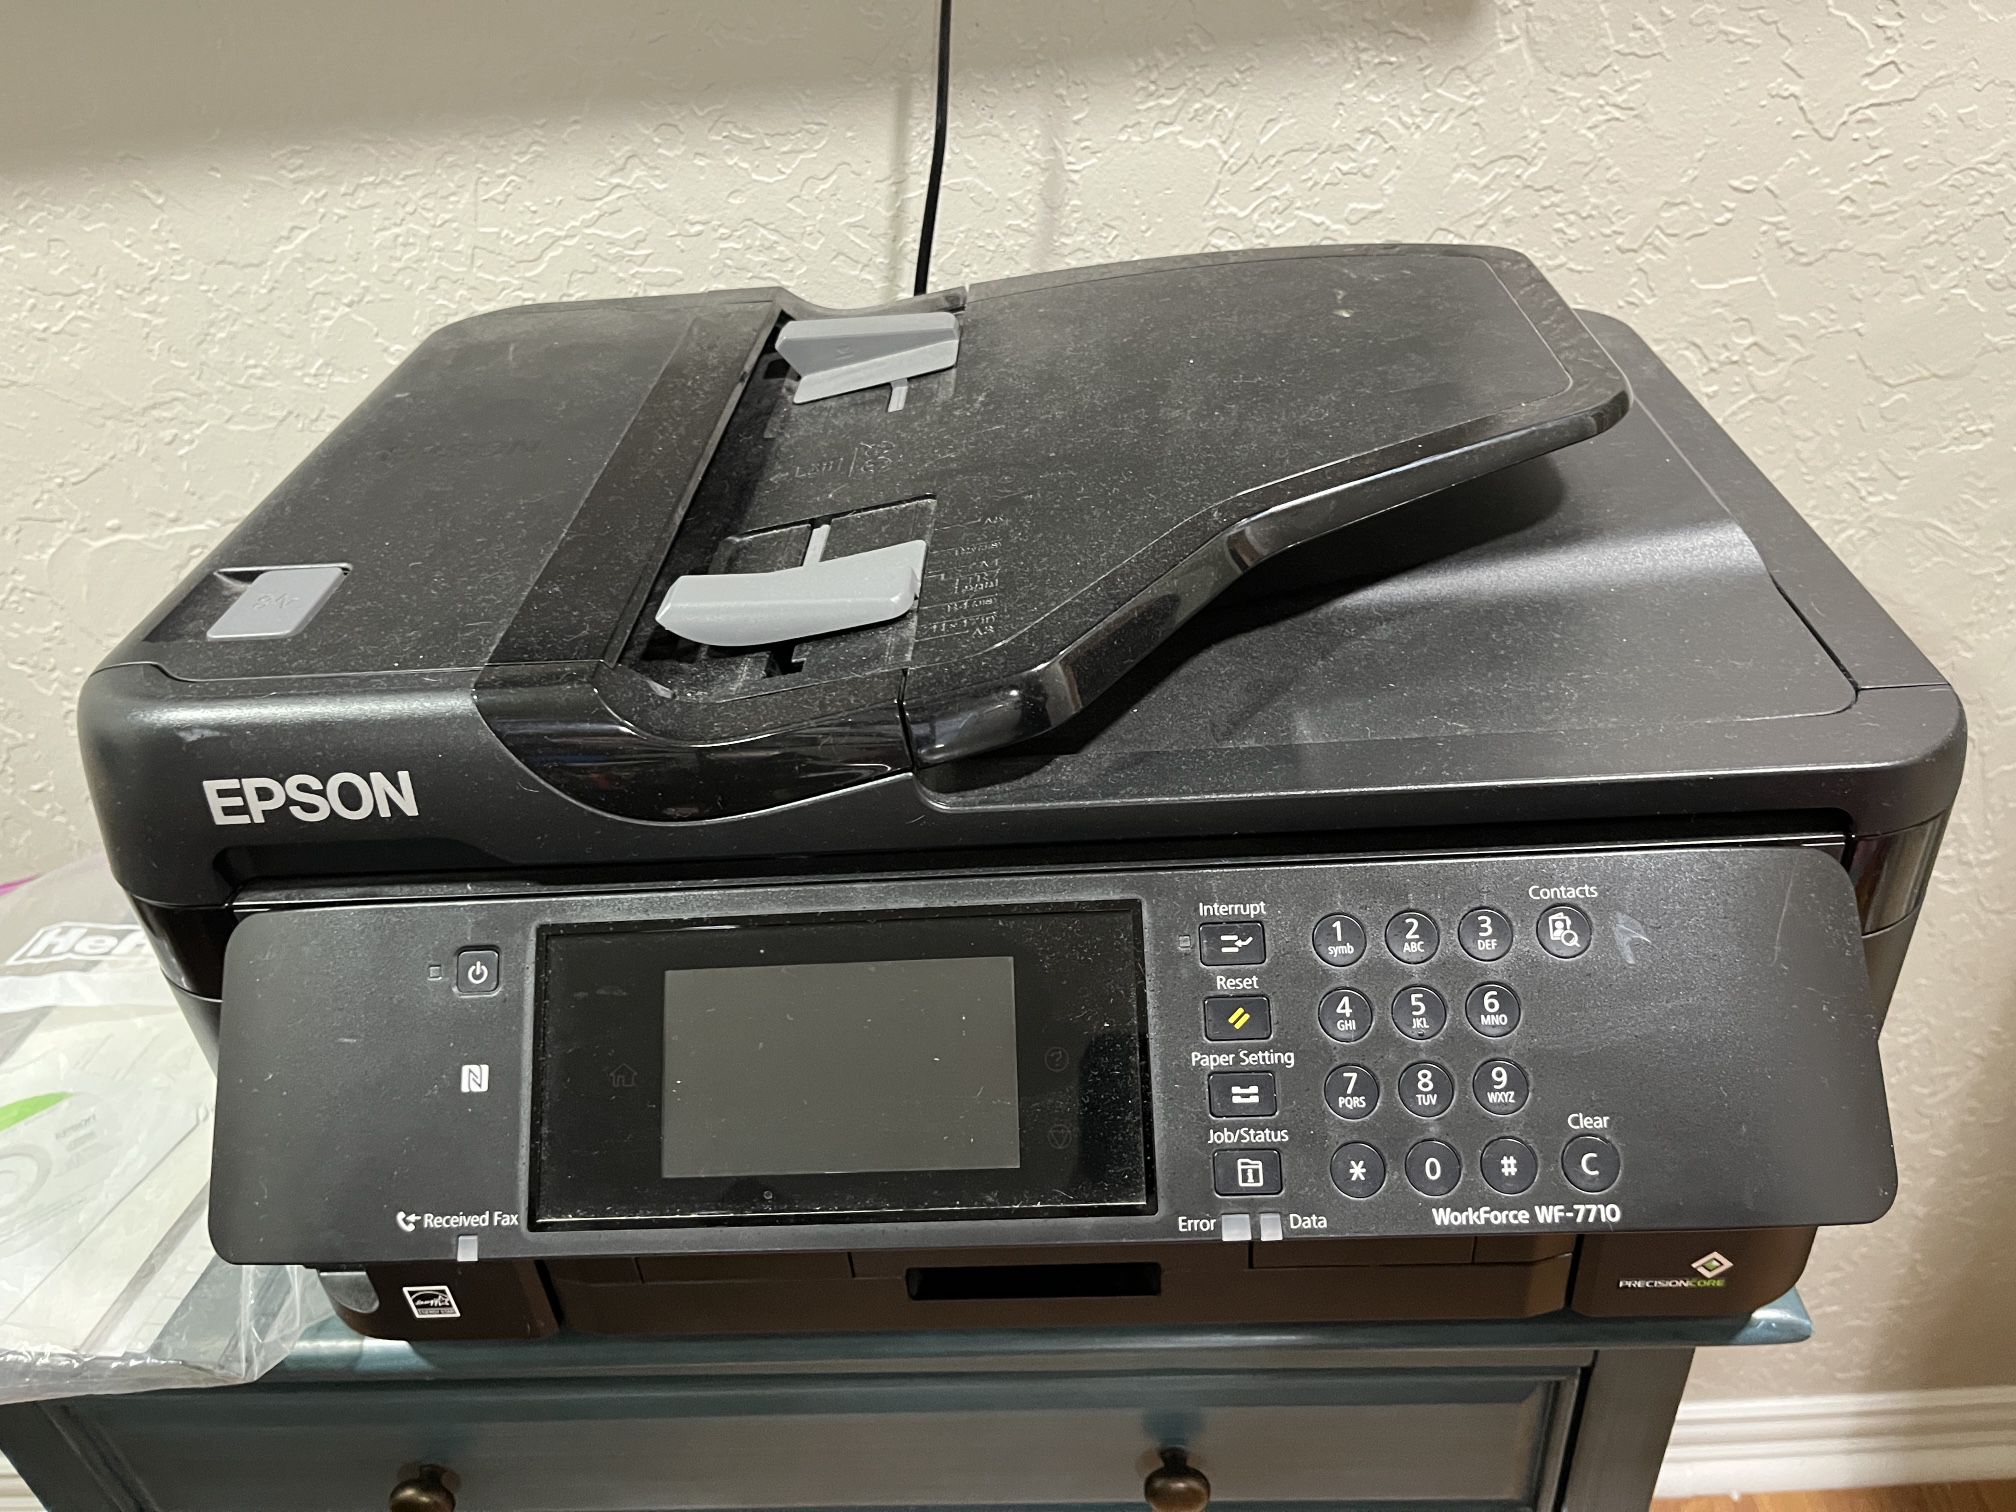 Epson workforce Printer WF-7710